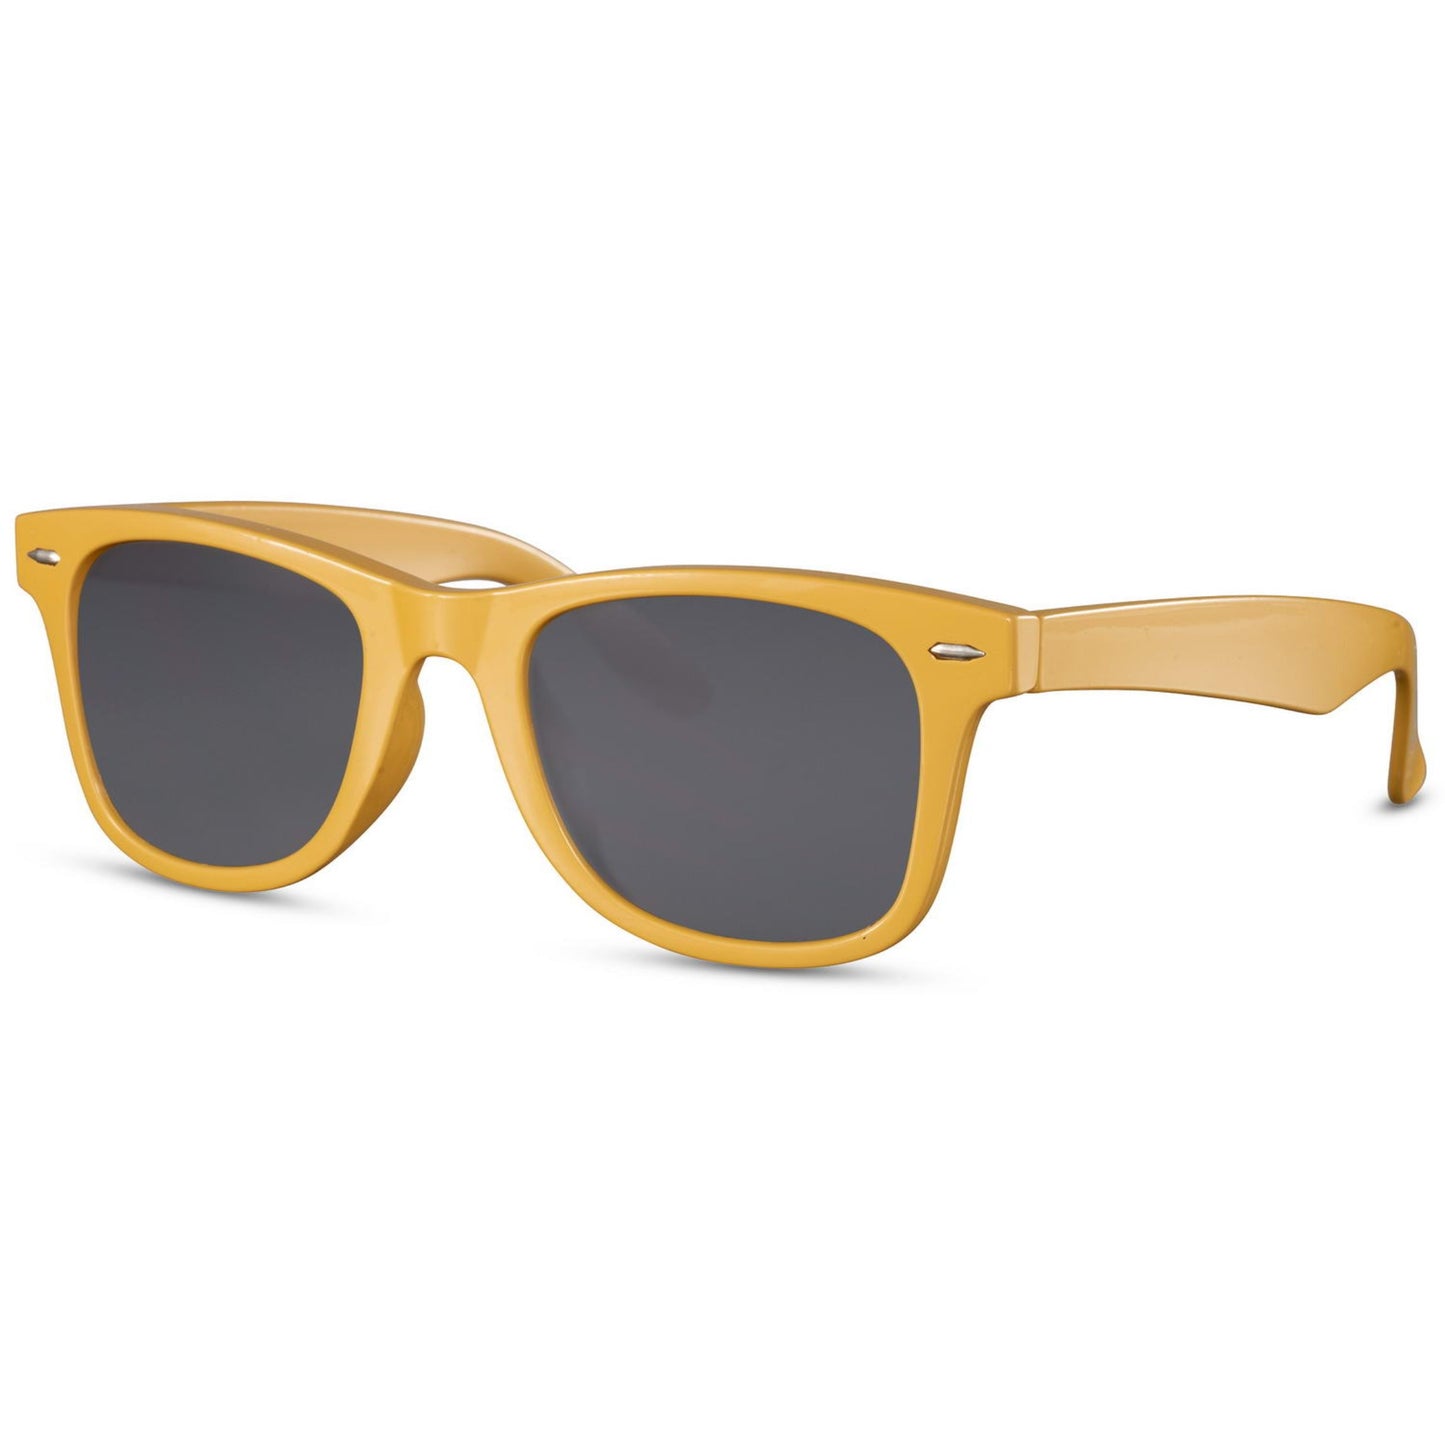 Nevada - Sunglasses - Exposure Sunglasses - NDL6188